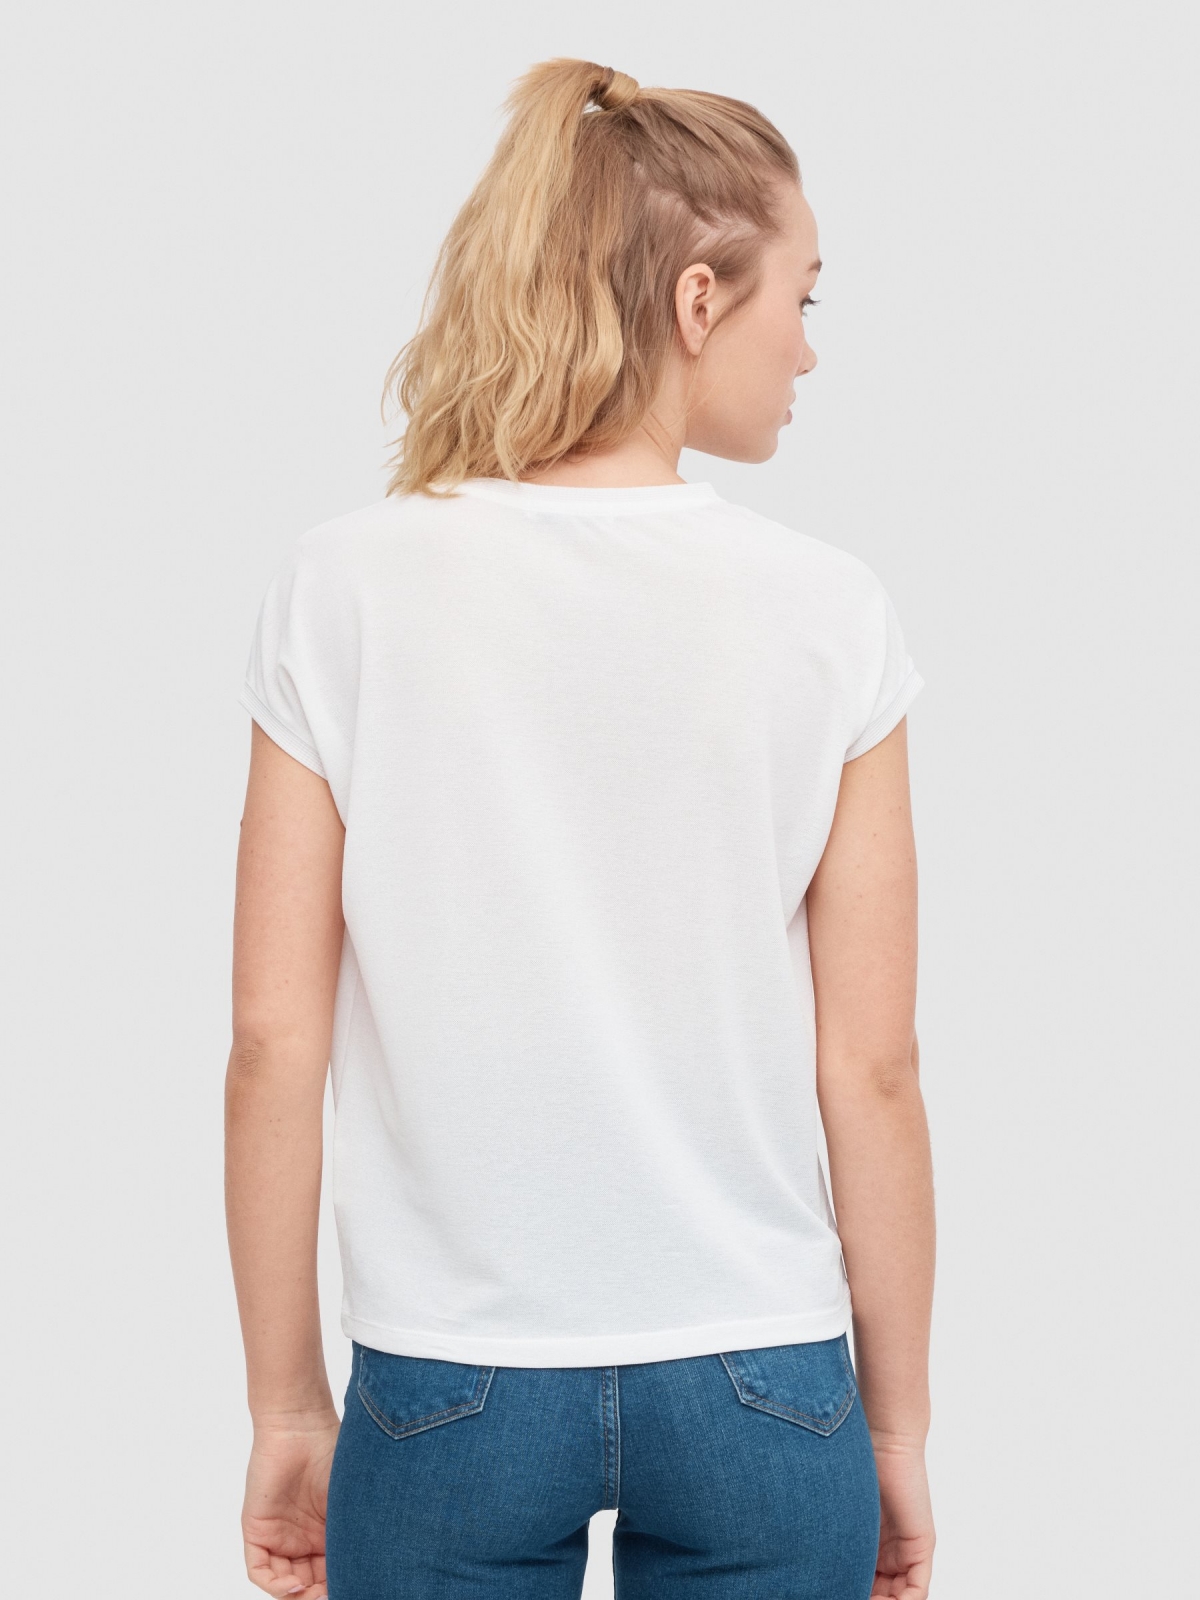 Camiseta New York blanco roto vista media trasera